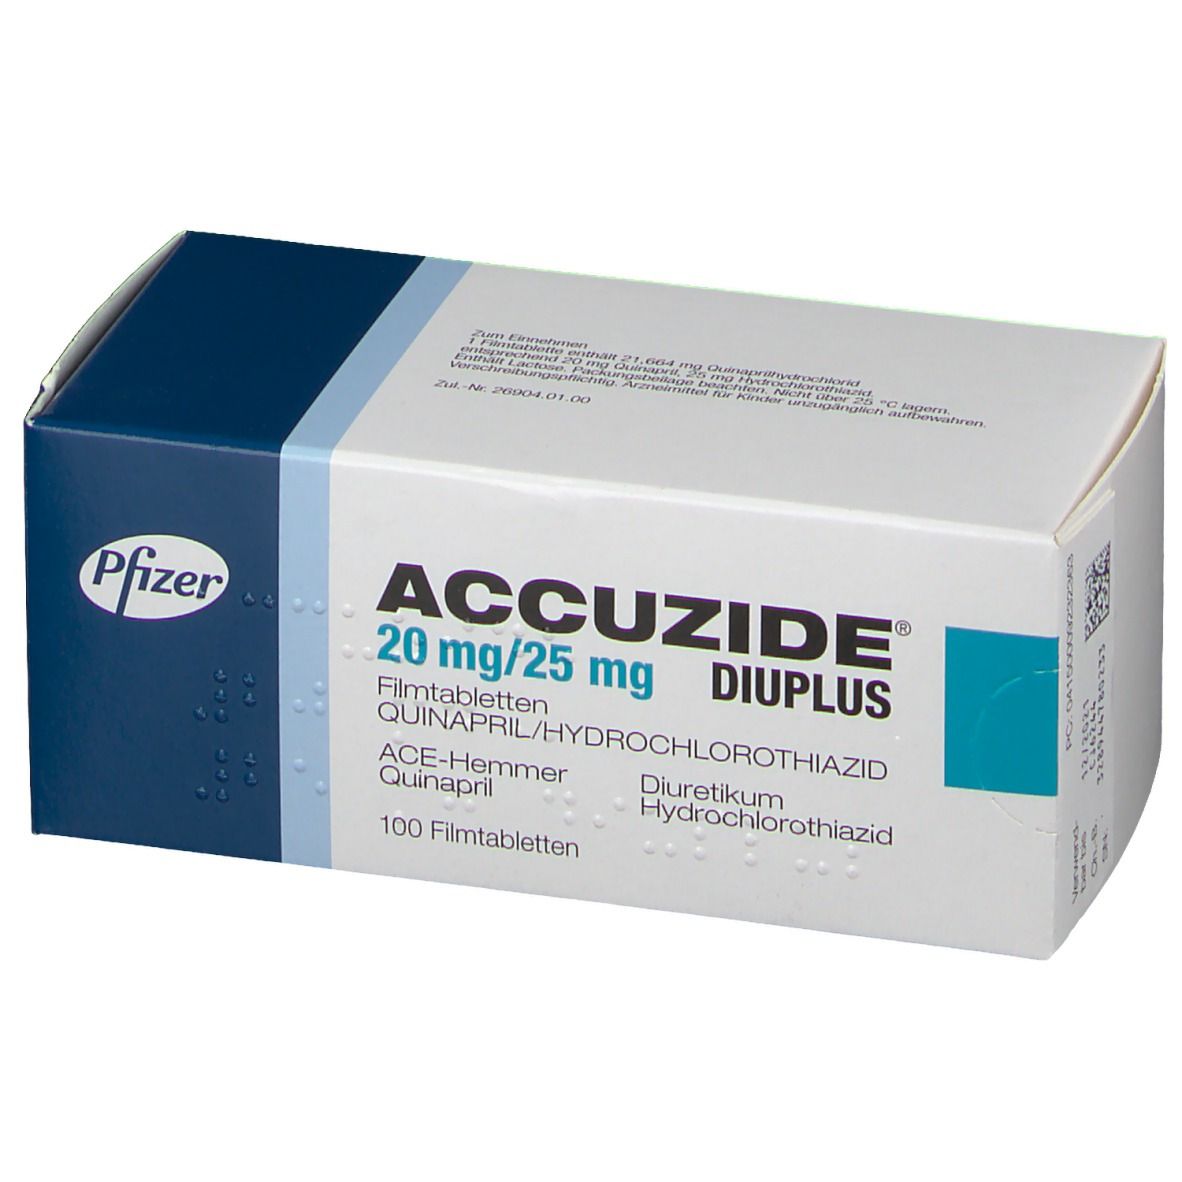 ACCUZIDE® 20 mg/25 mg Diuplus